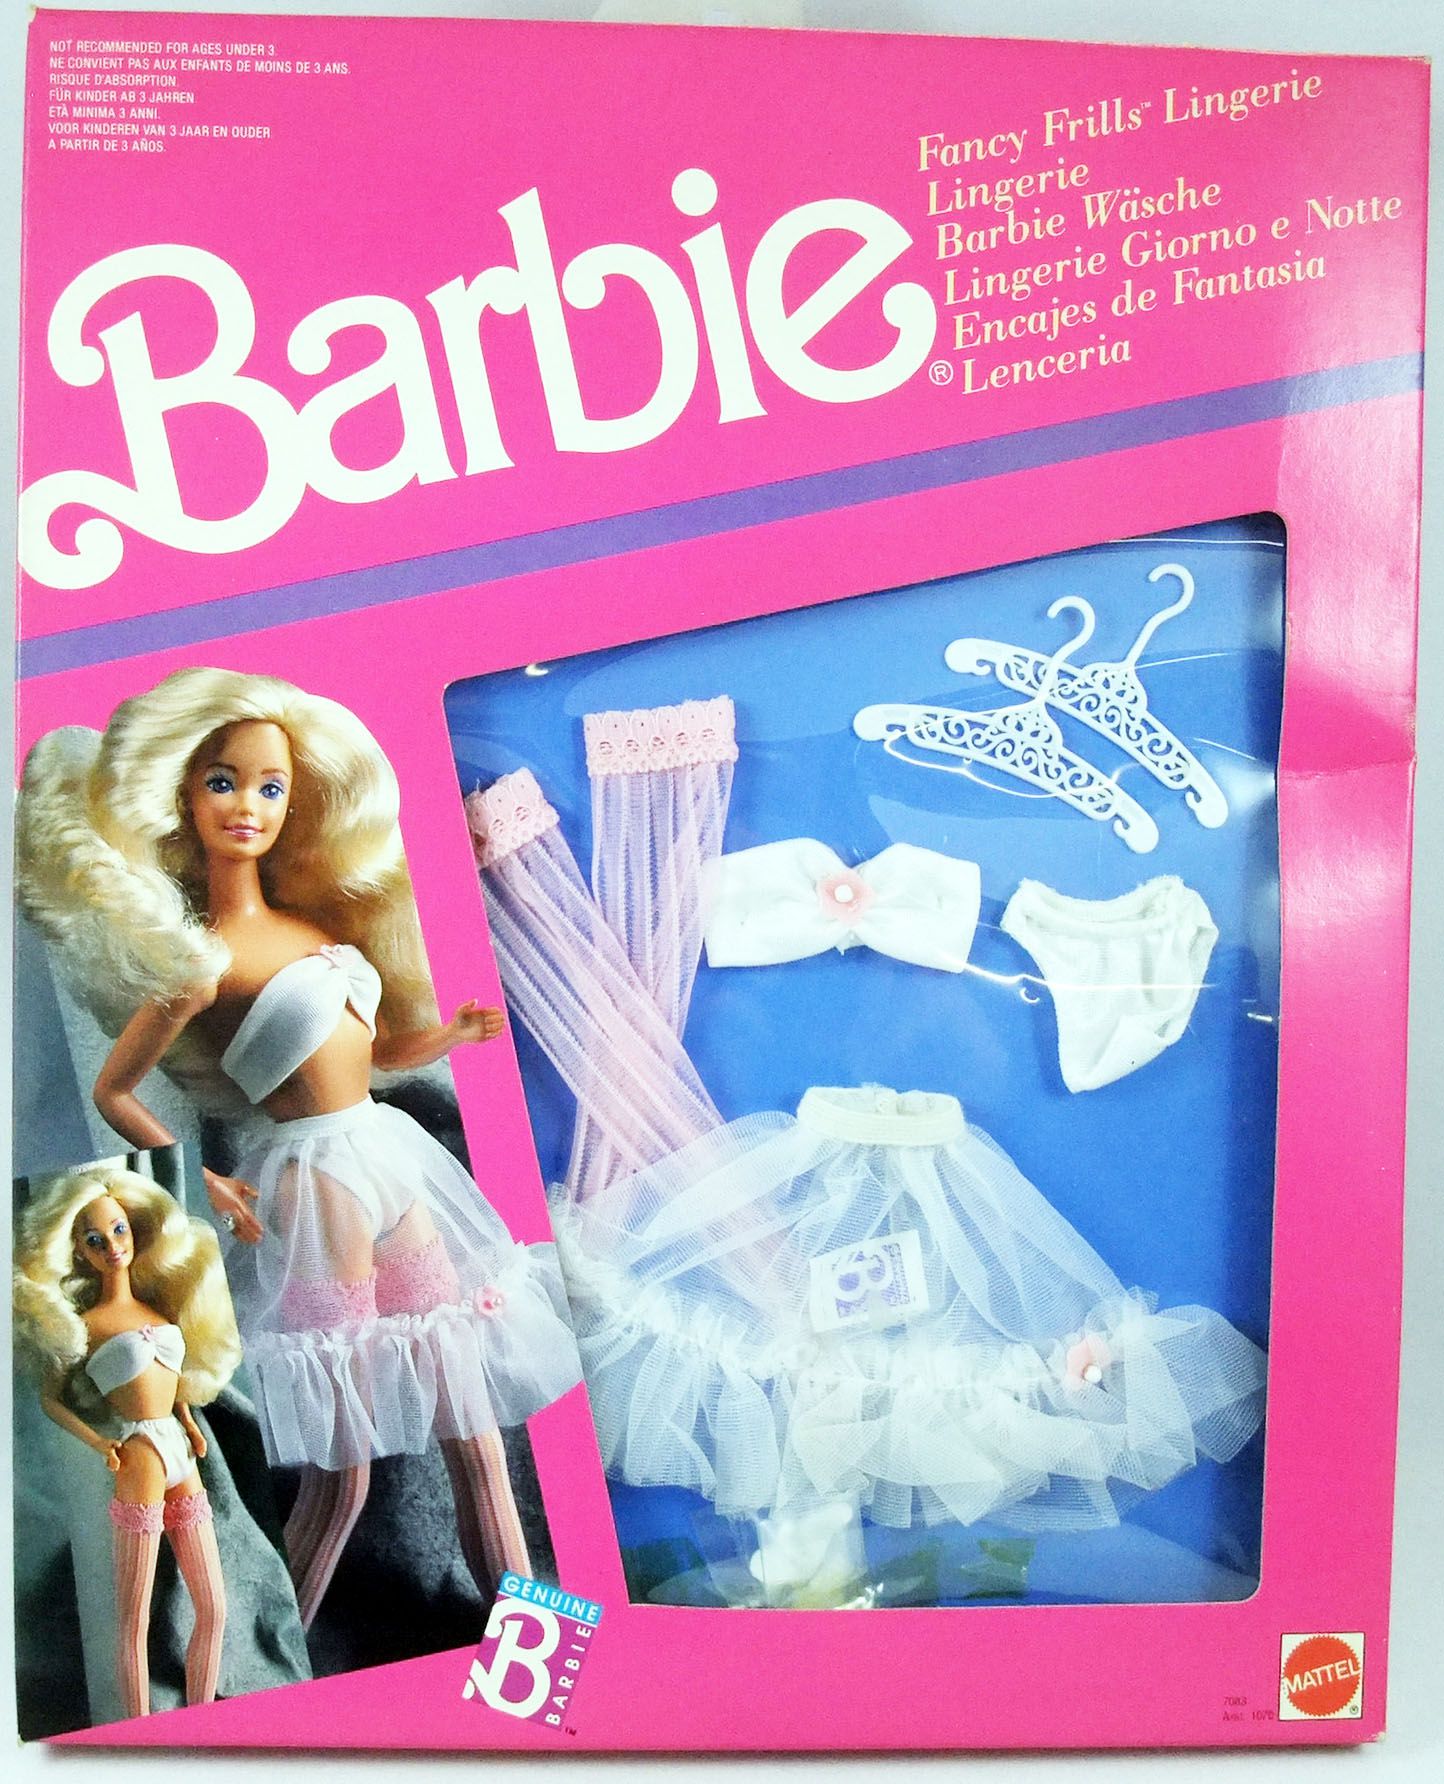 1986 Barbie Fancy Frills Lingerie (1980-1989 Clothing) - Nice